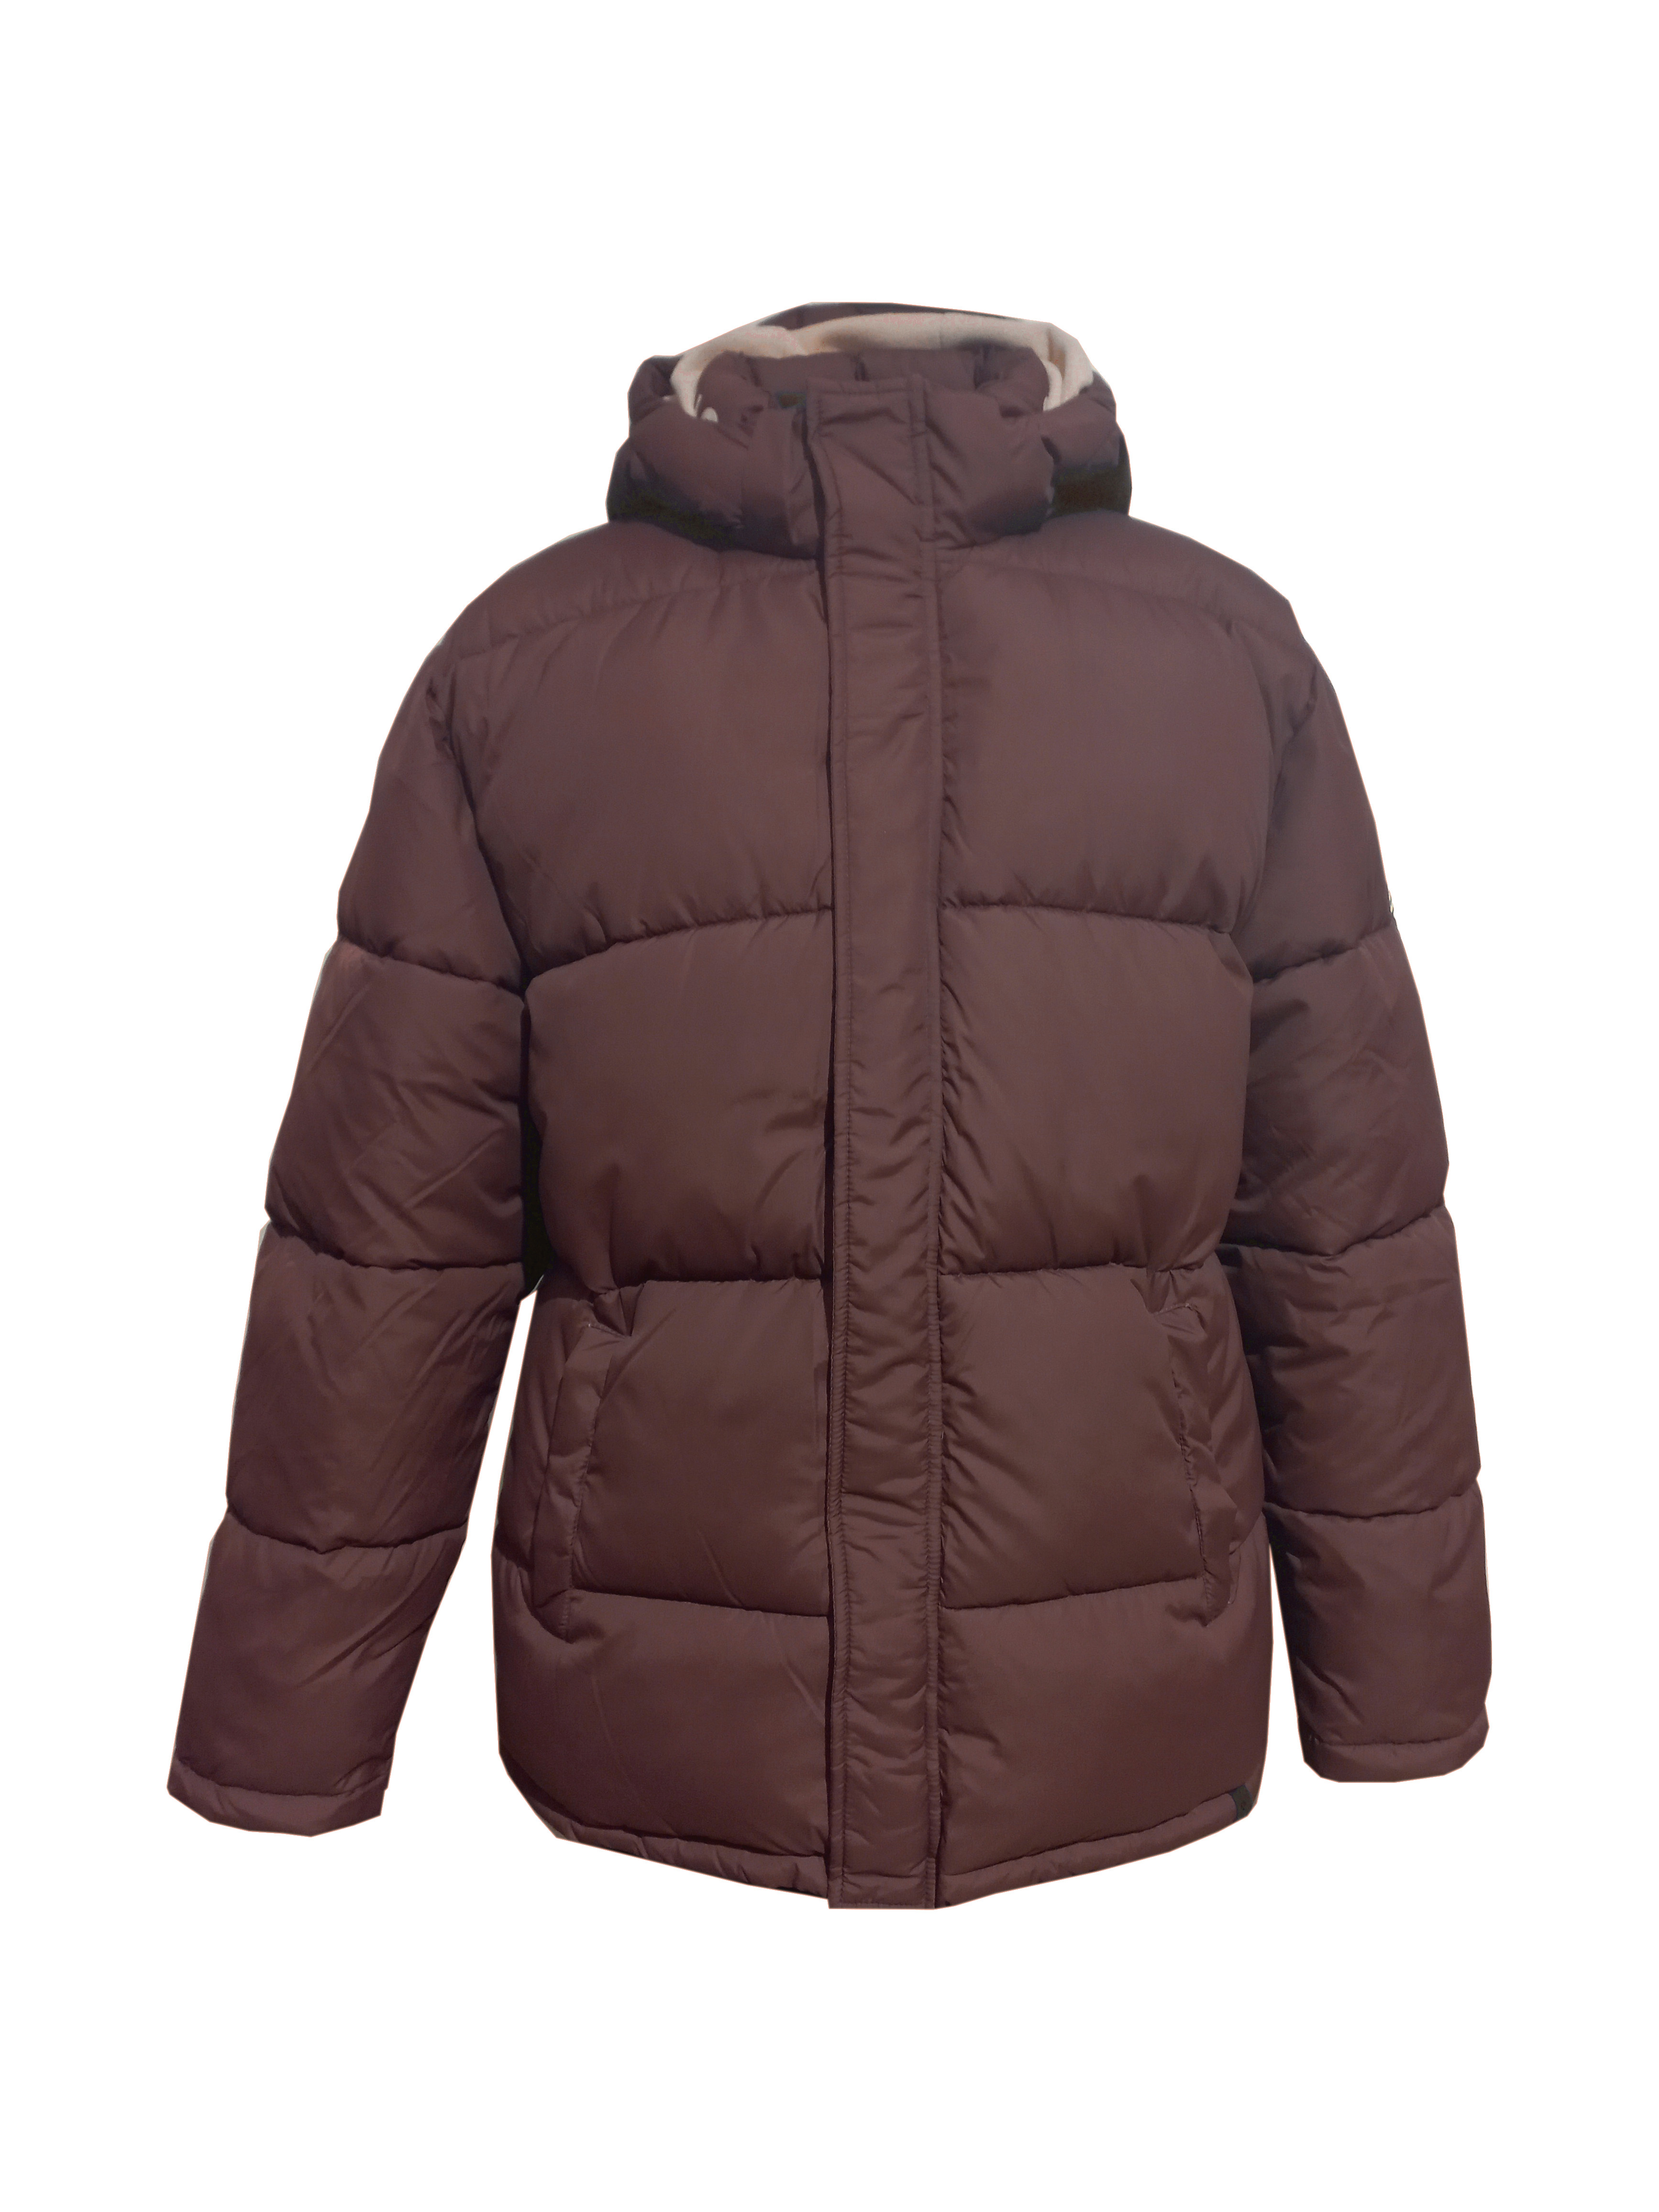 Зимняя куртка мужская Colours&Sons 9222/650/250 коричневая 56 RU